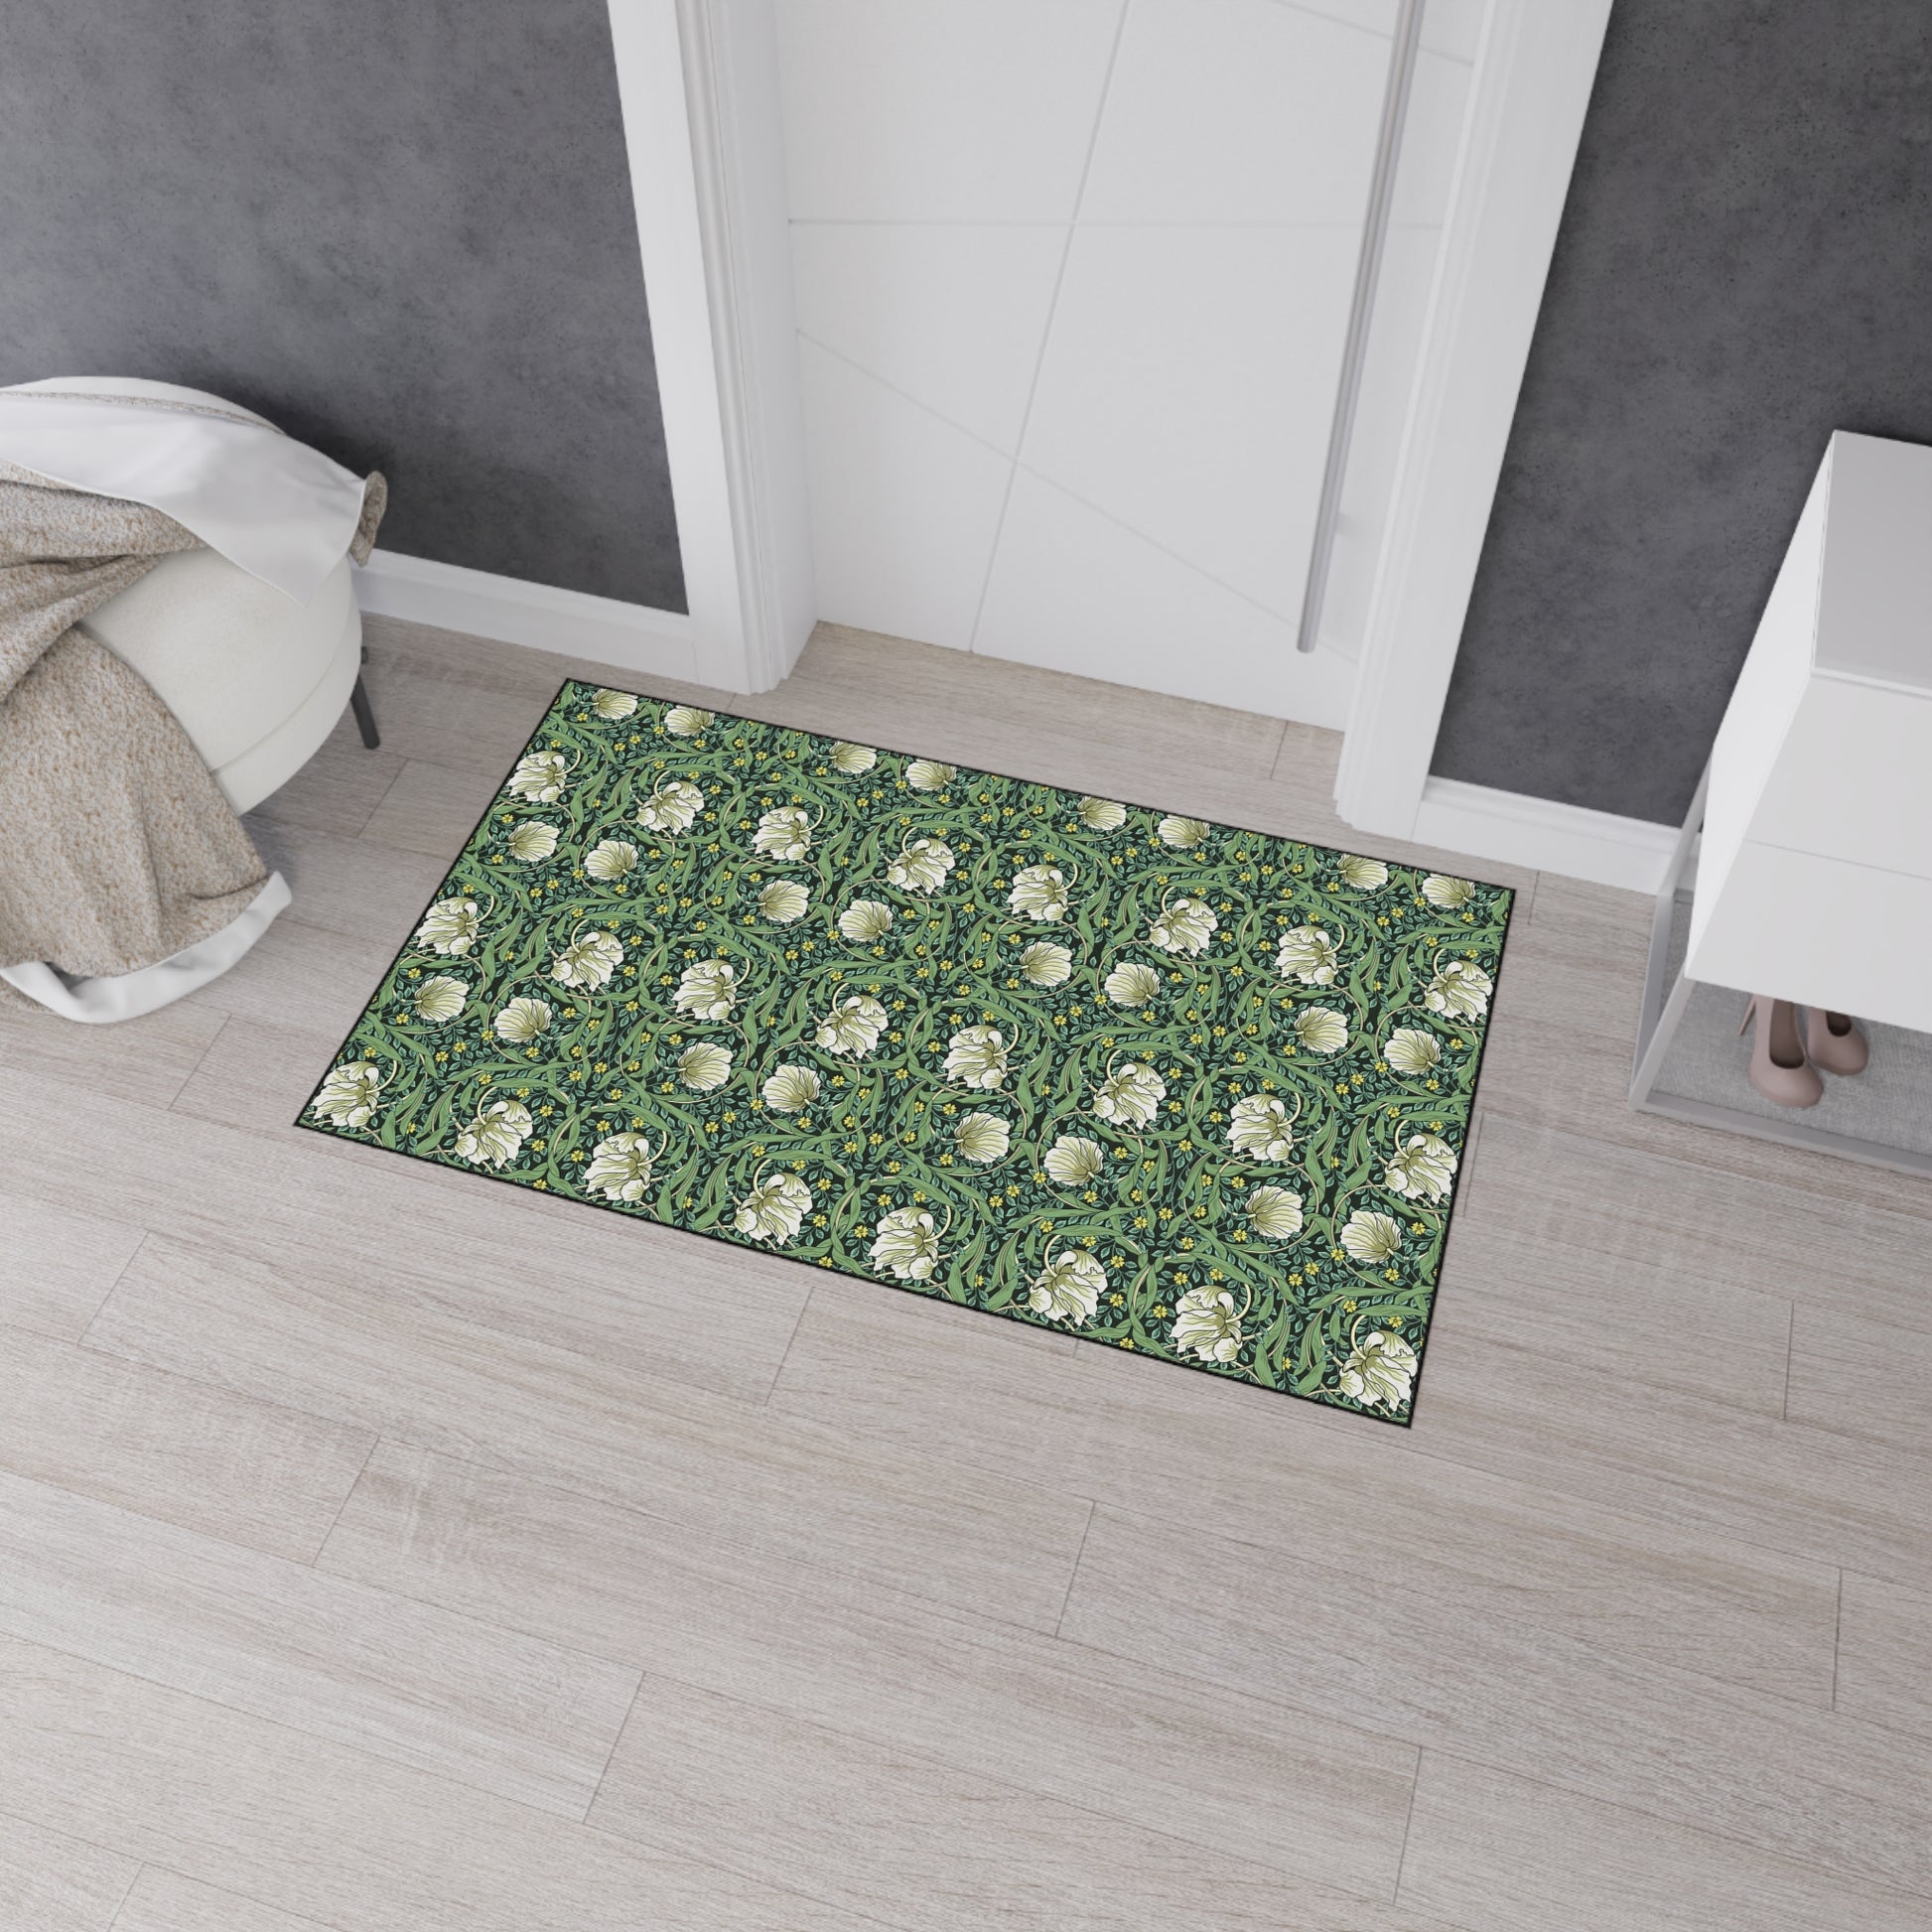 william-morris-co-heavy-duty-floor-mat-floor-mat-pimpernel-collection-green-17